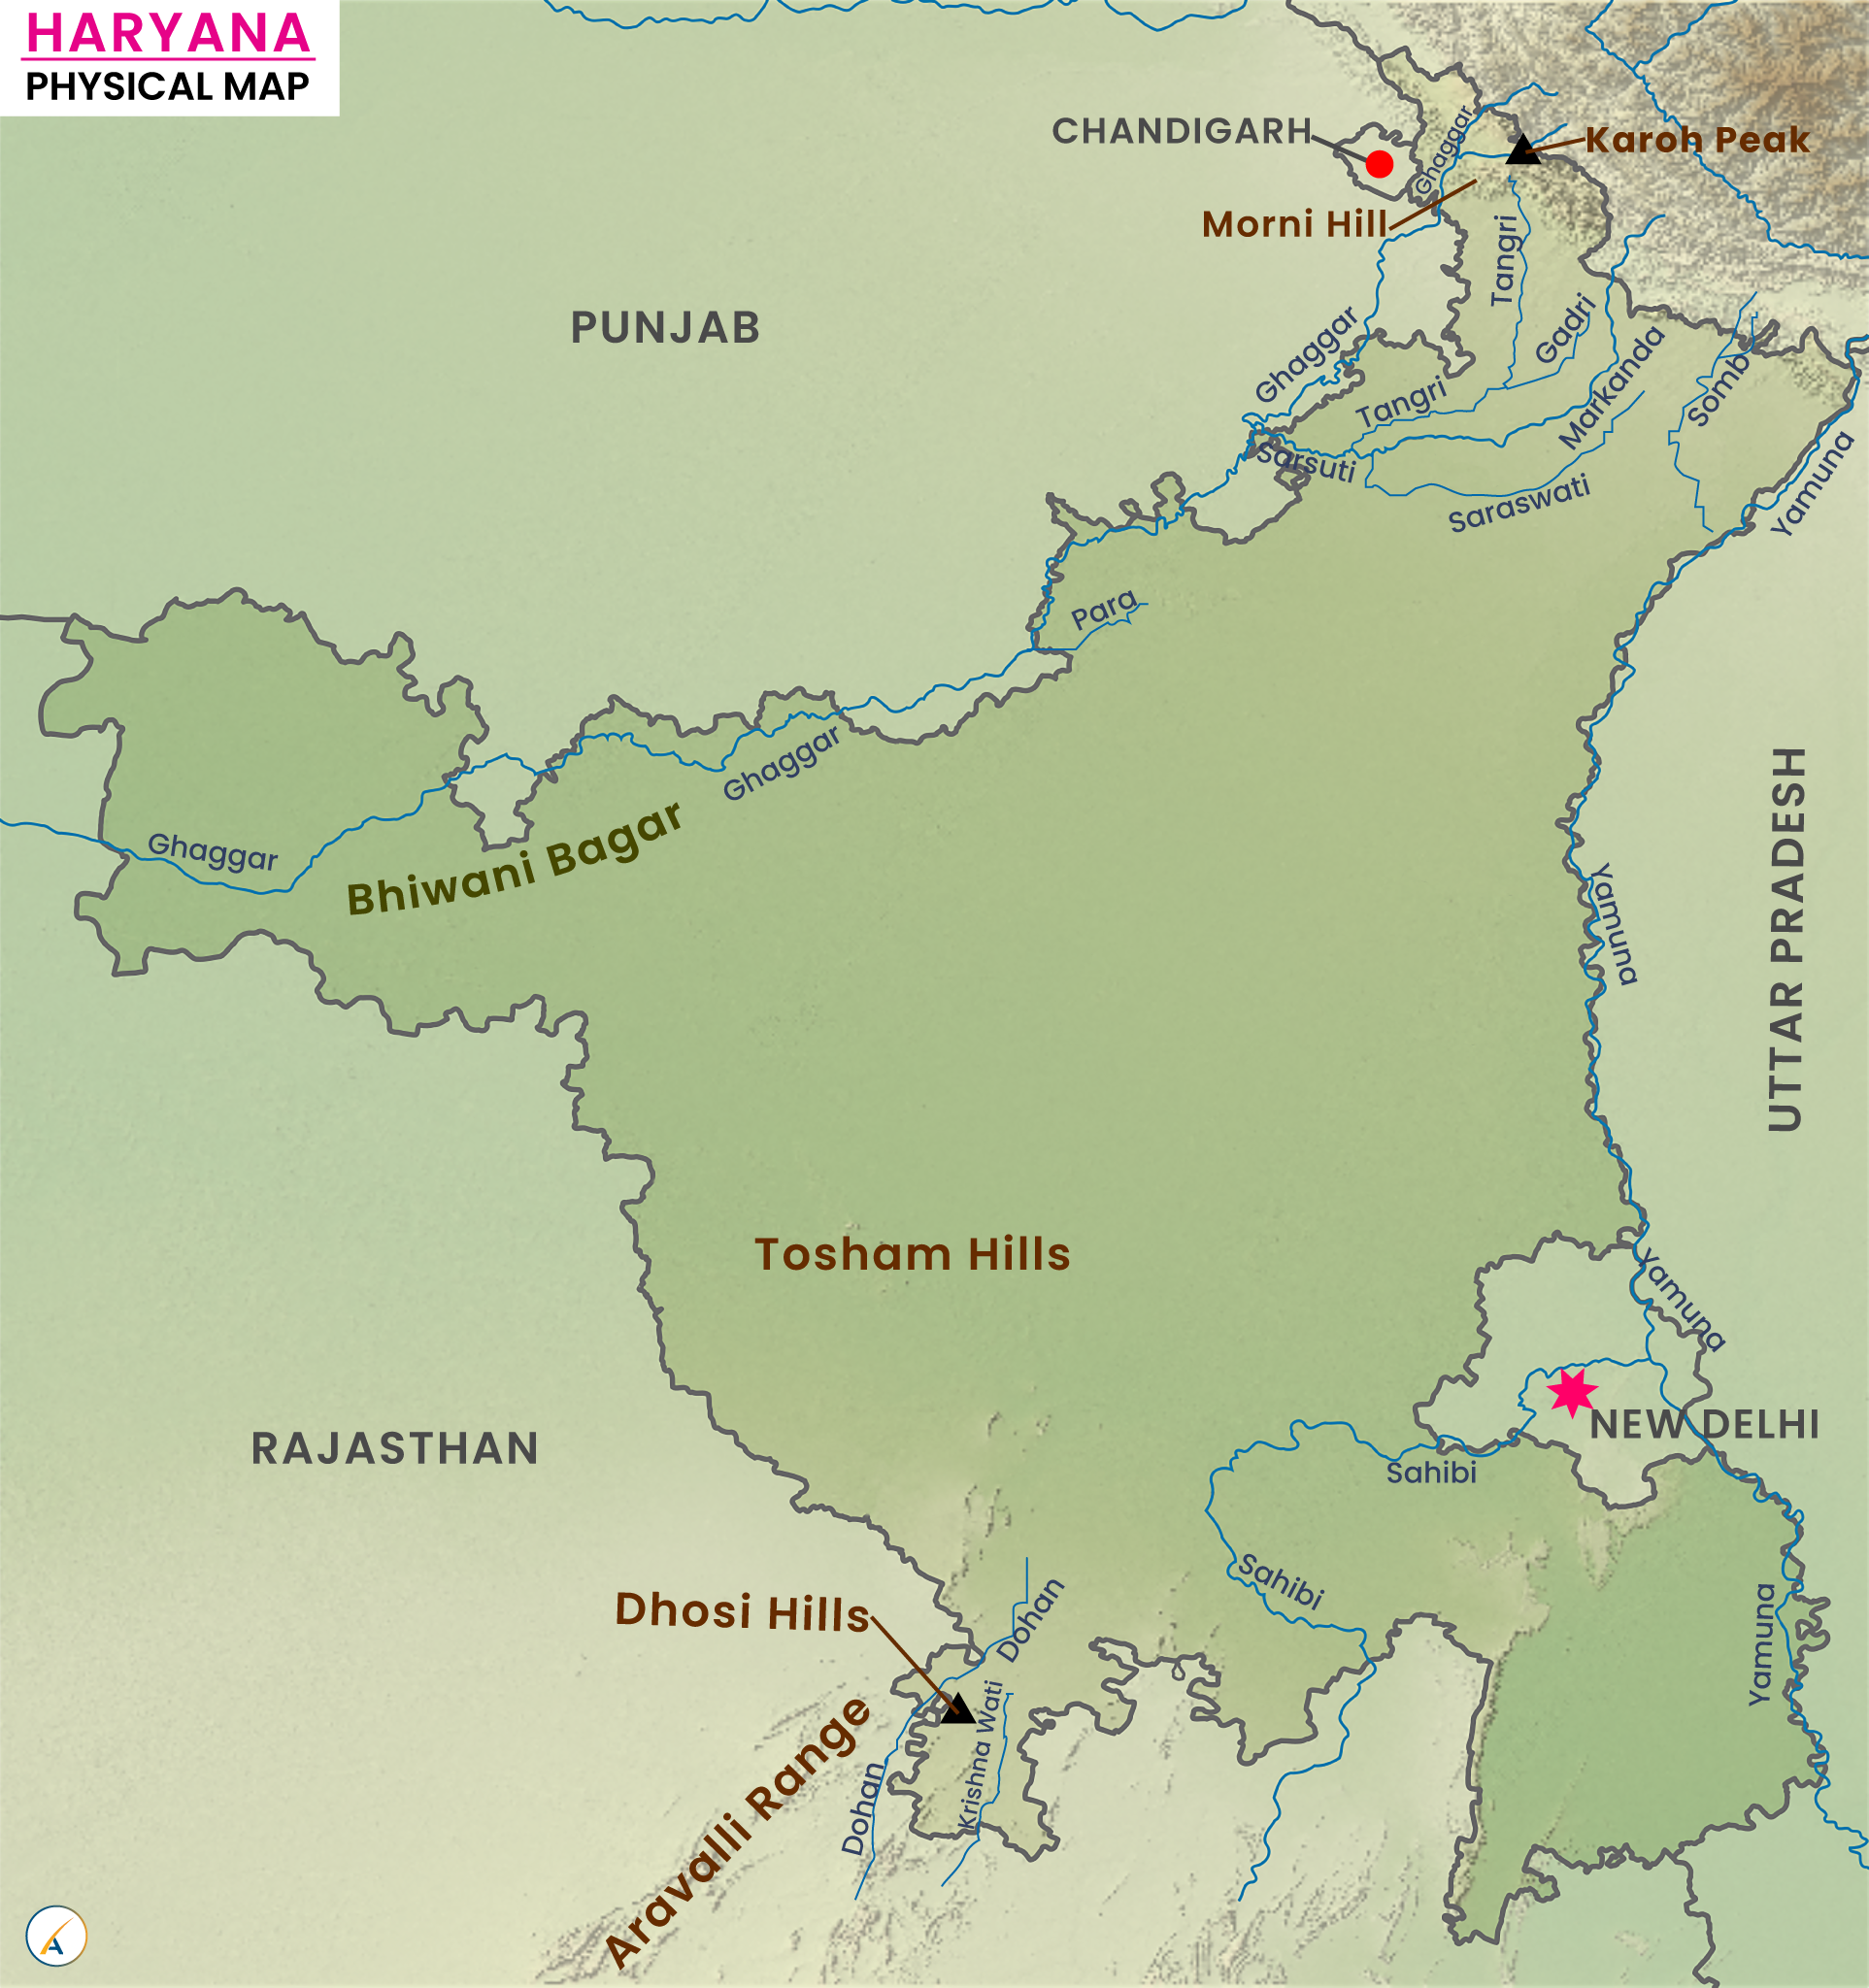 Haryana Physical Map